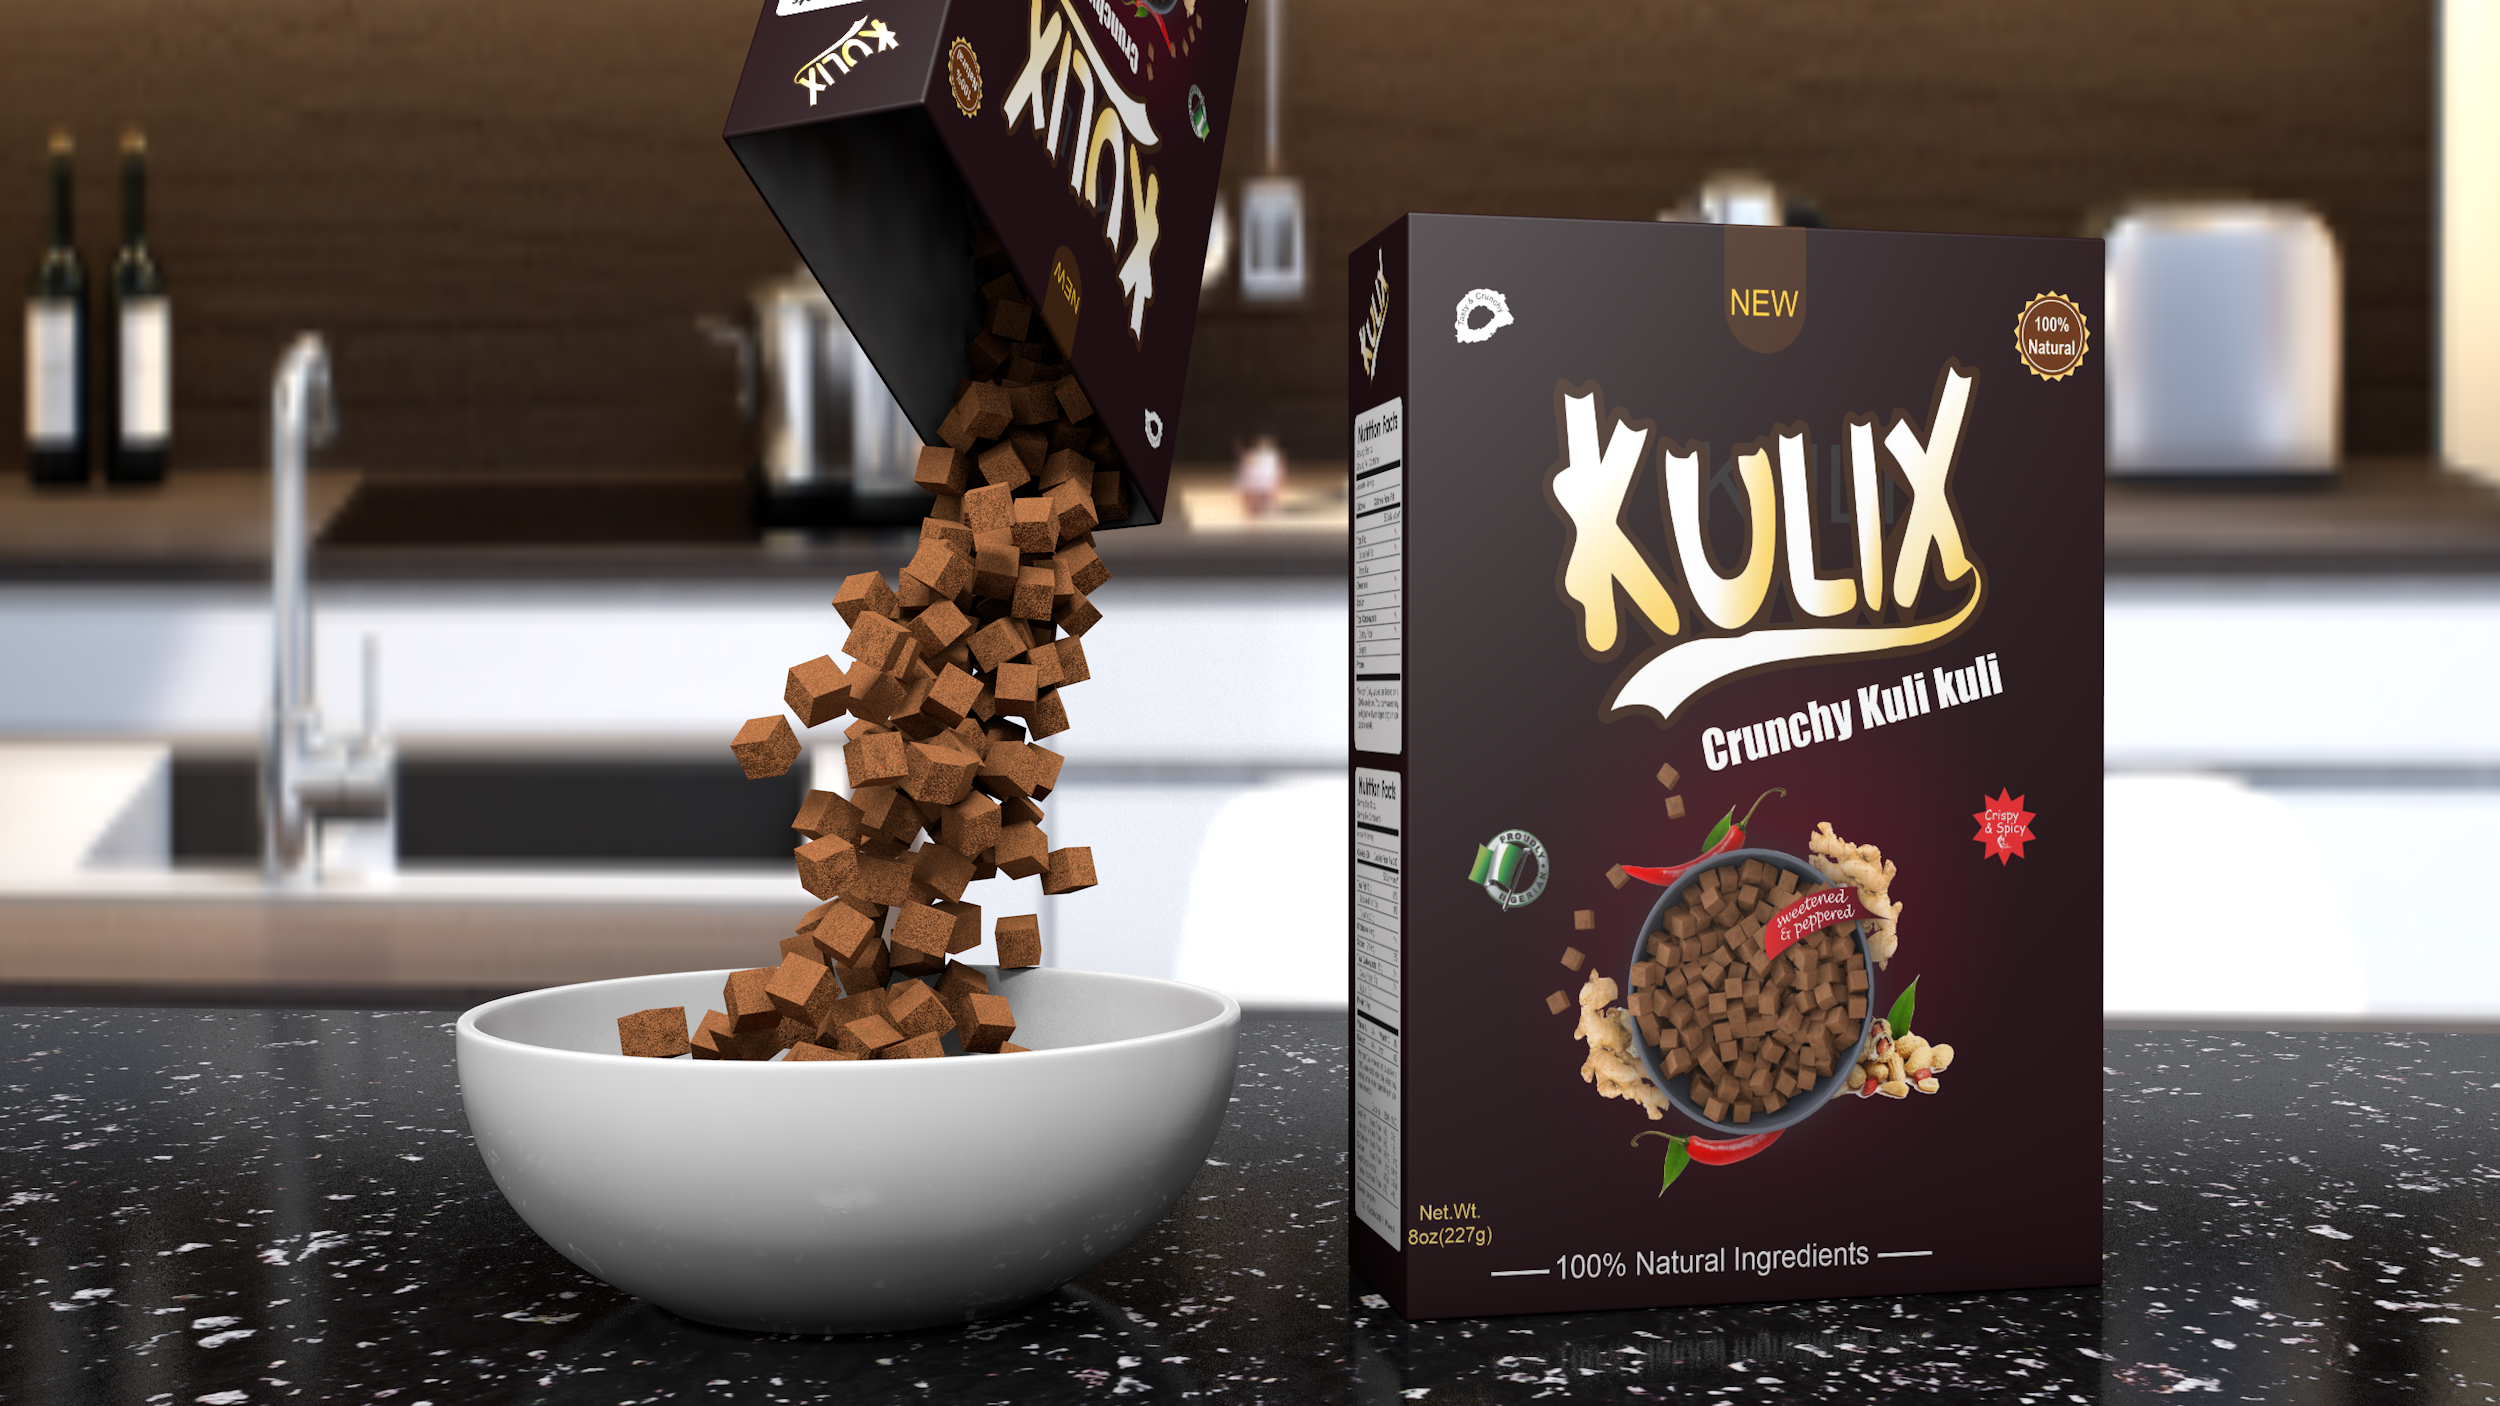 kulix Box Pack5, Taliban foods